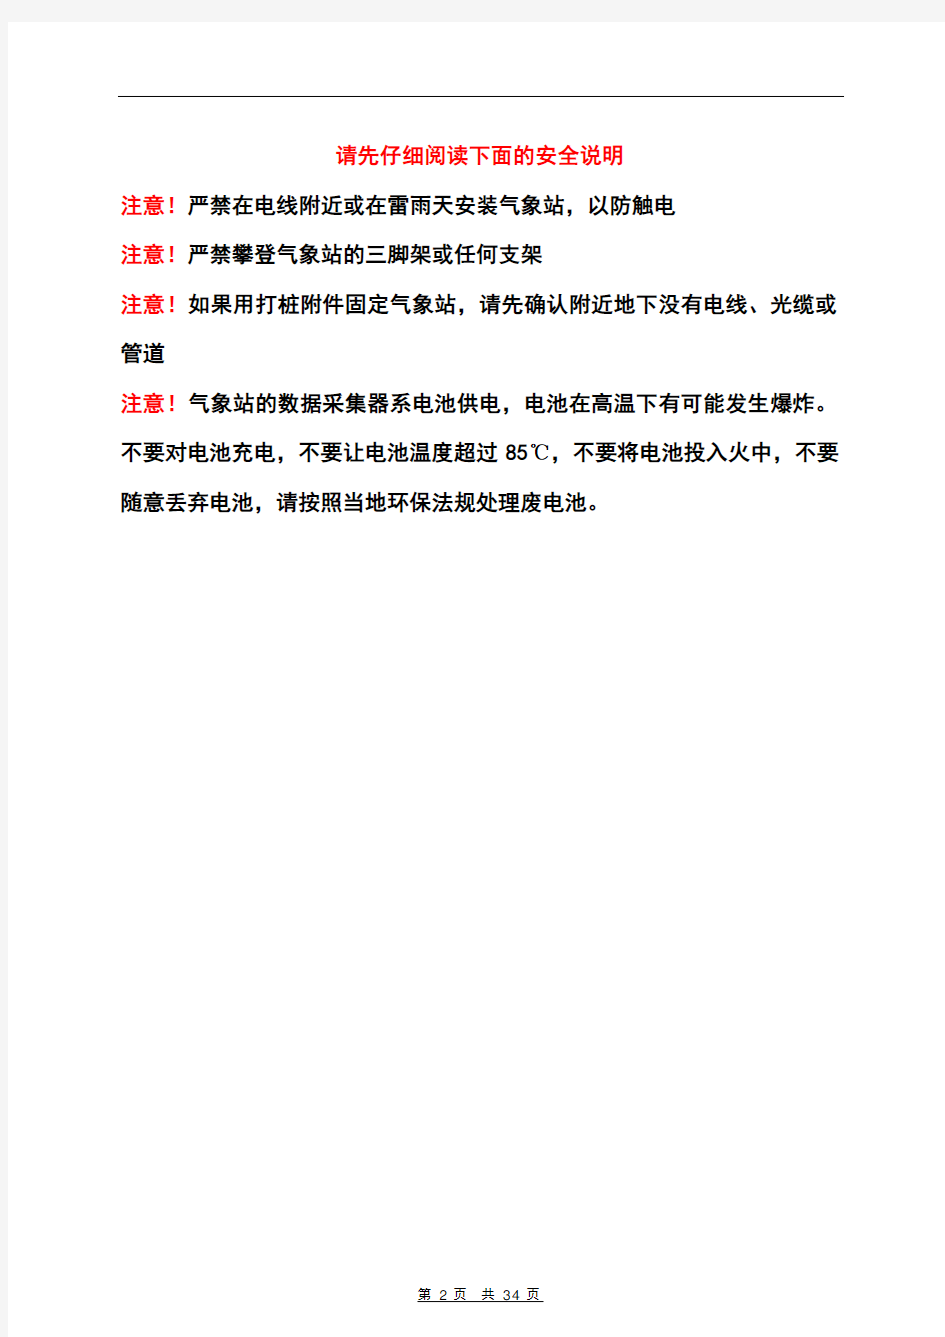 HOBO自动气象站中文操作手册